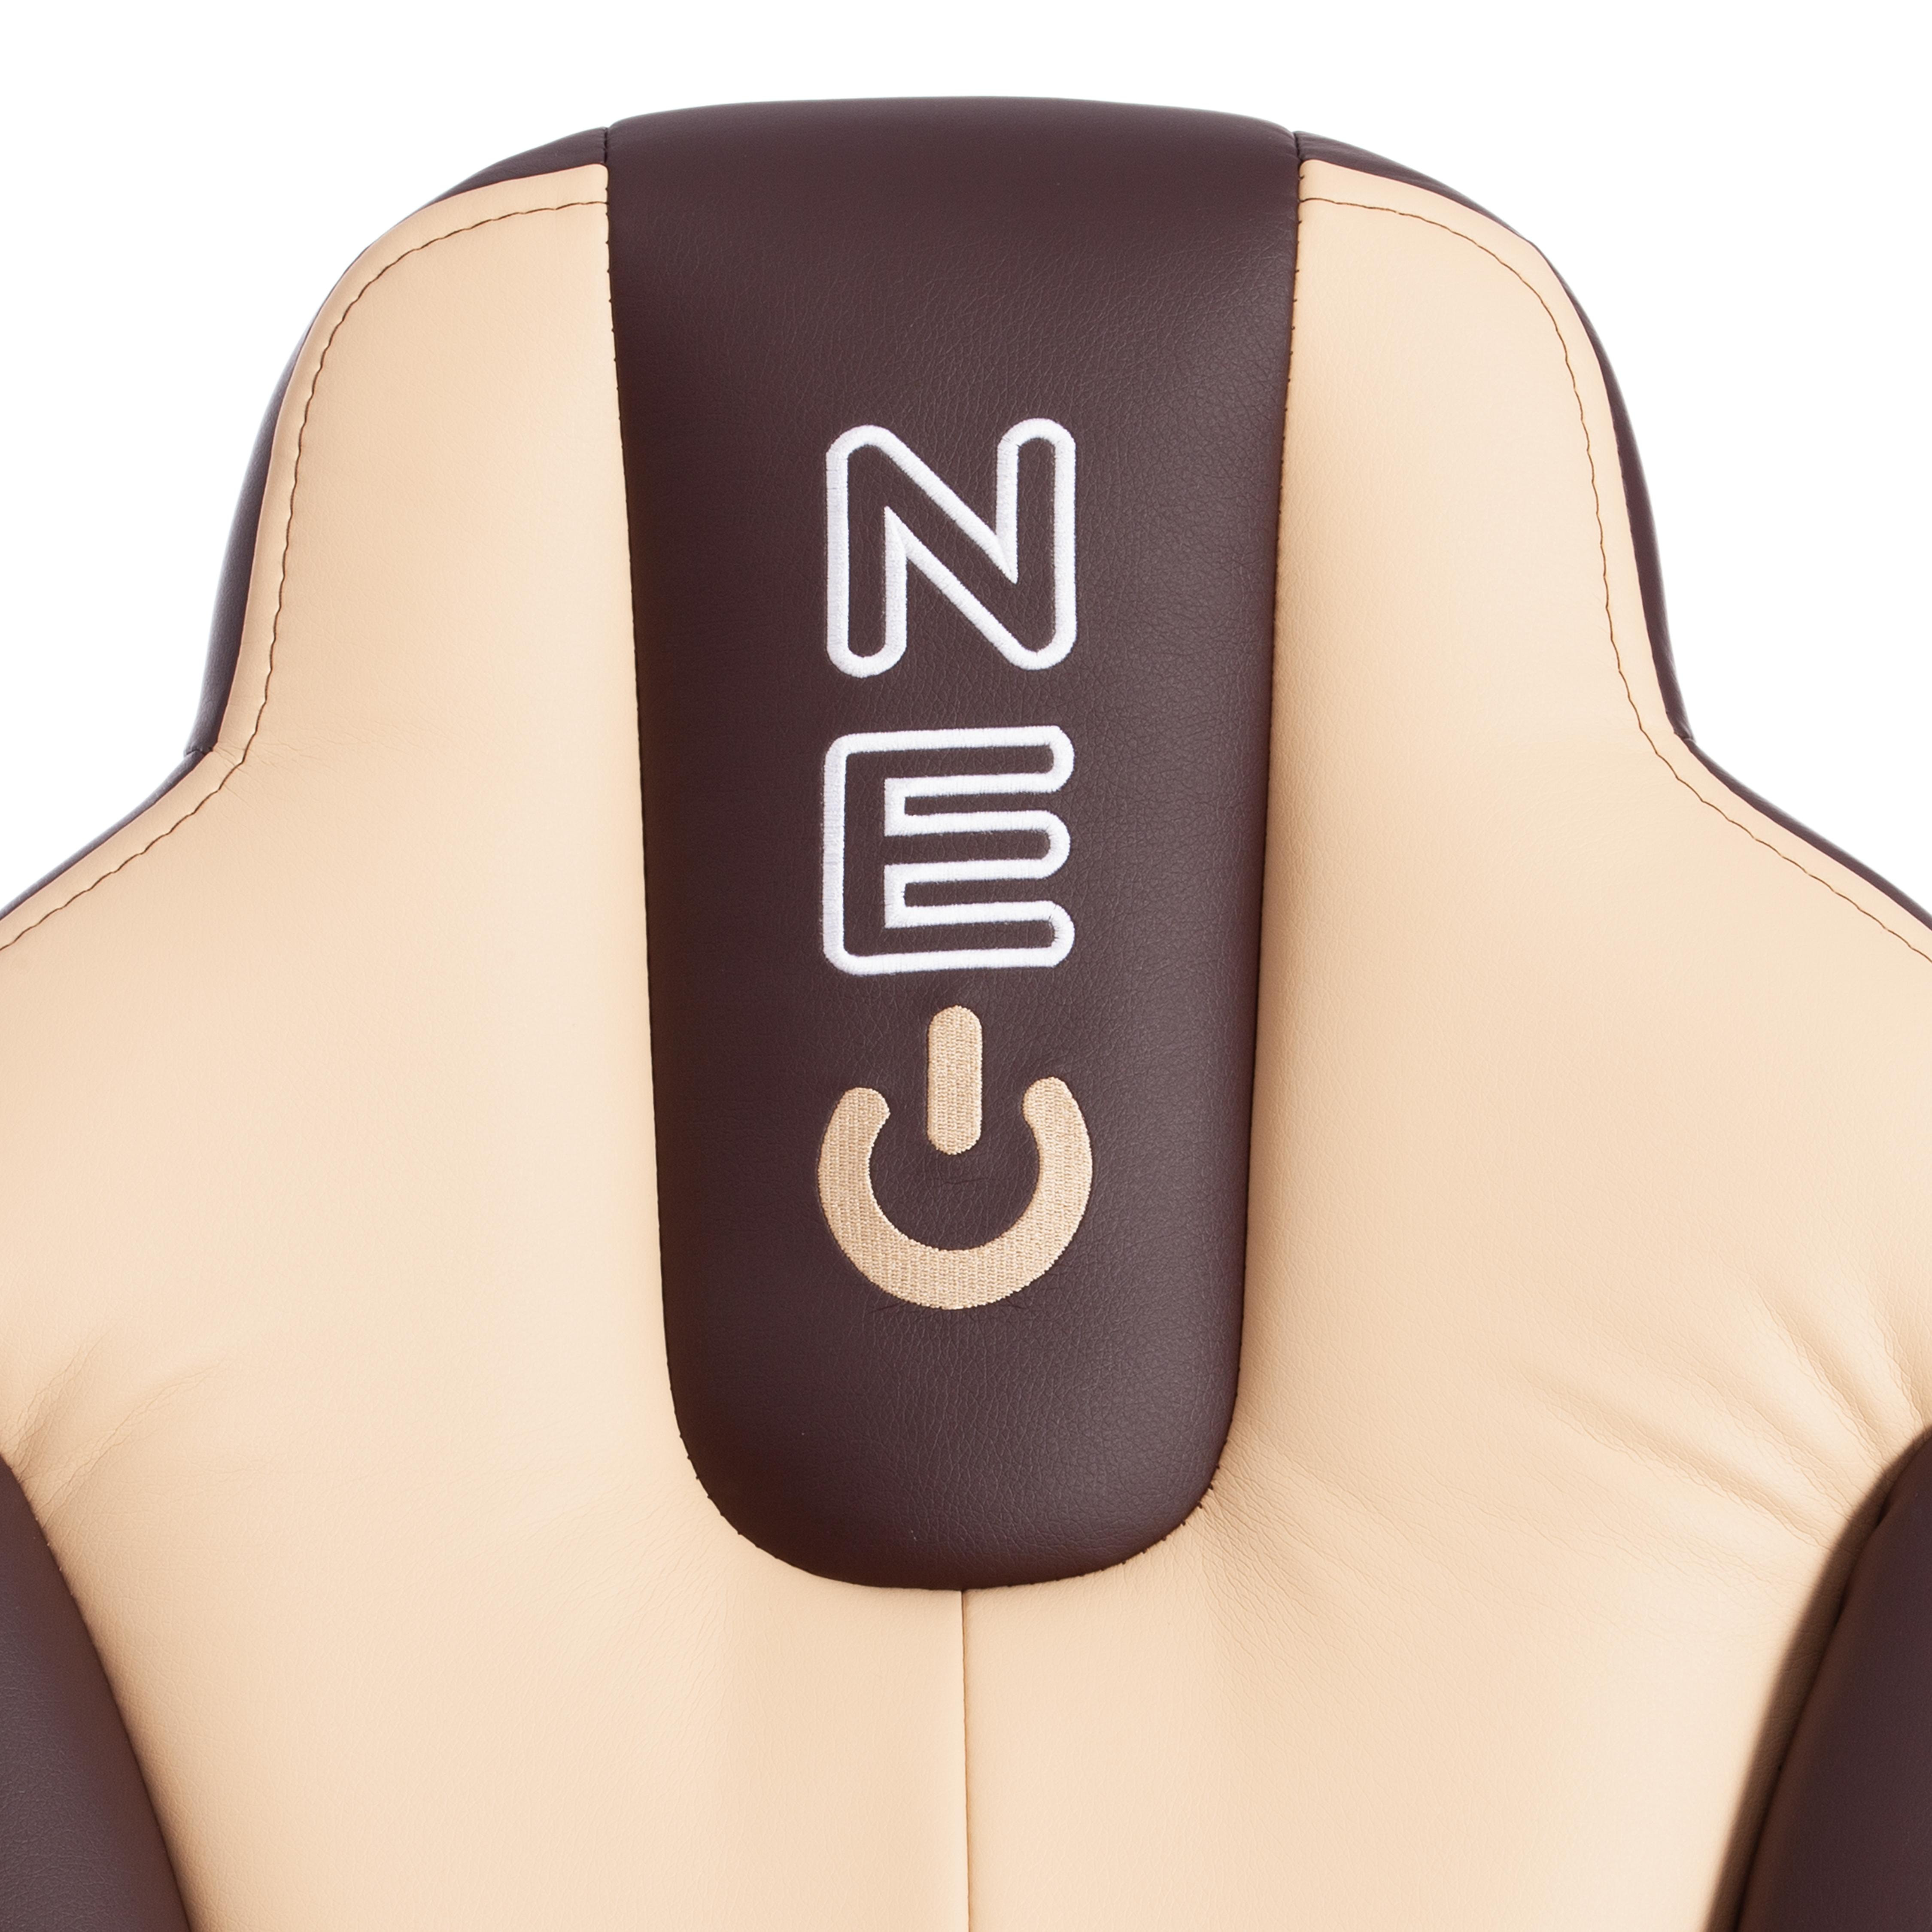 Кресло NEO (1) кож/зам, коричневый/бежевый, 36-36/36-34